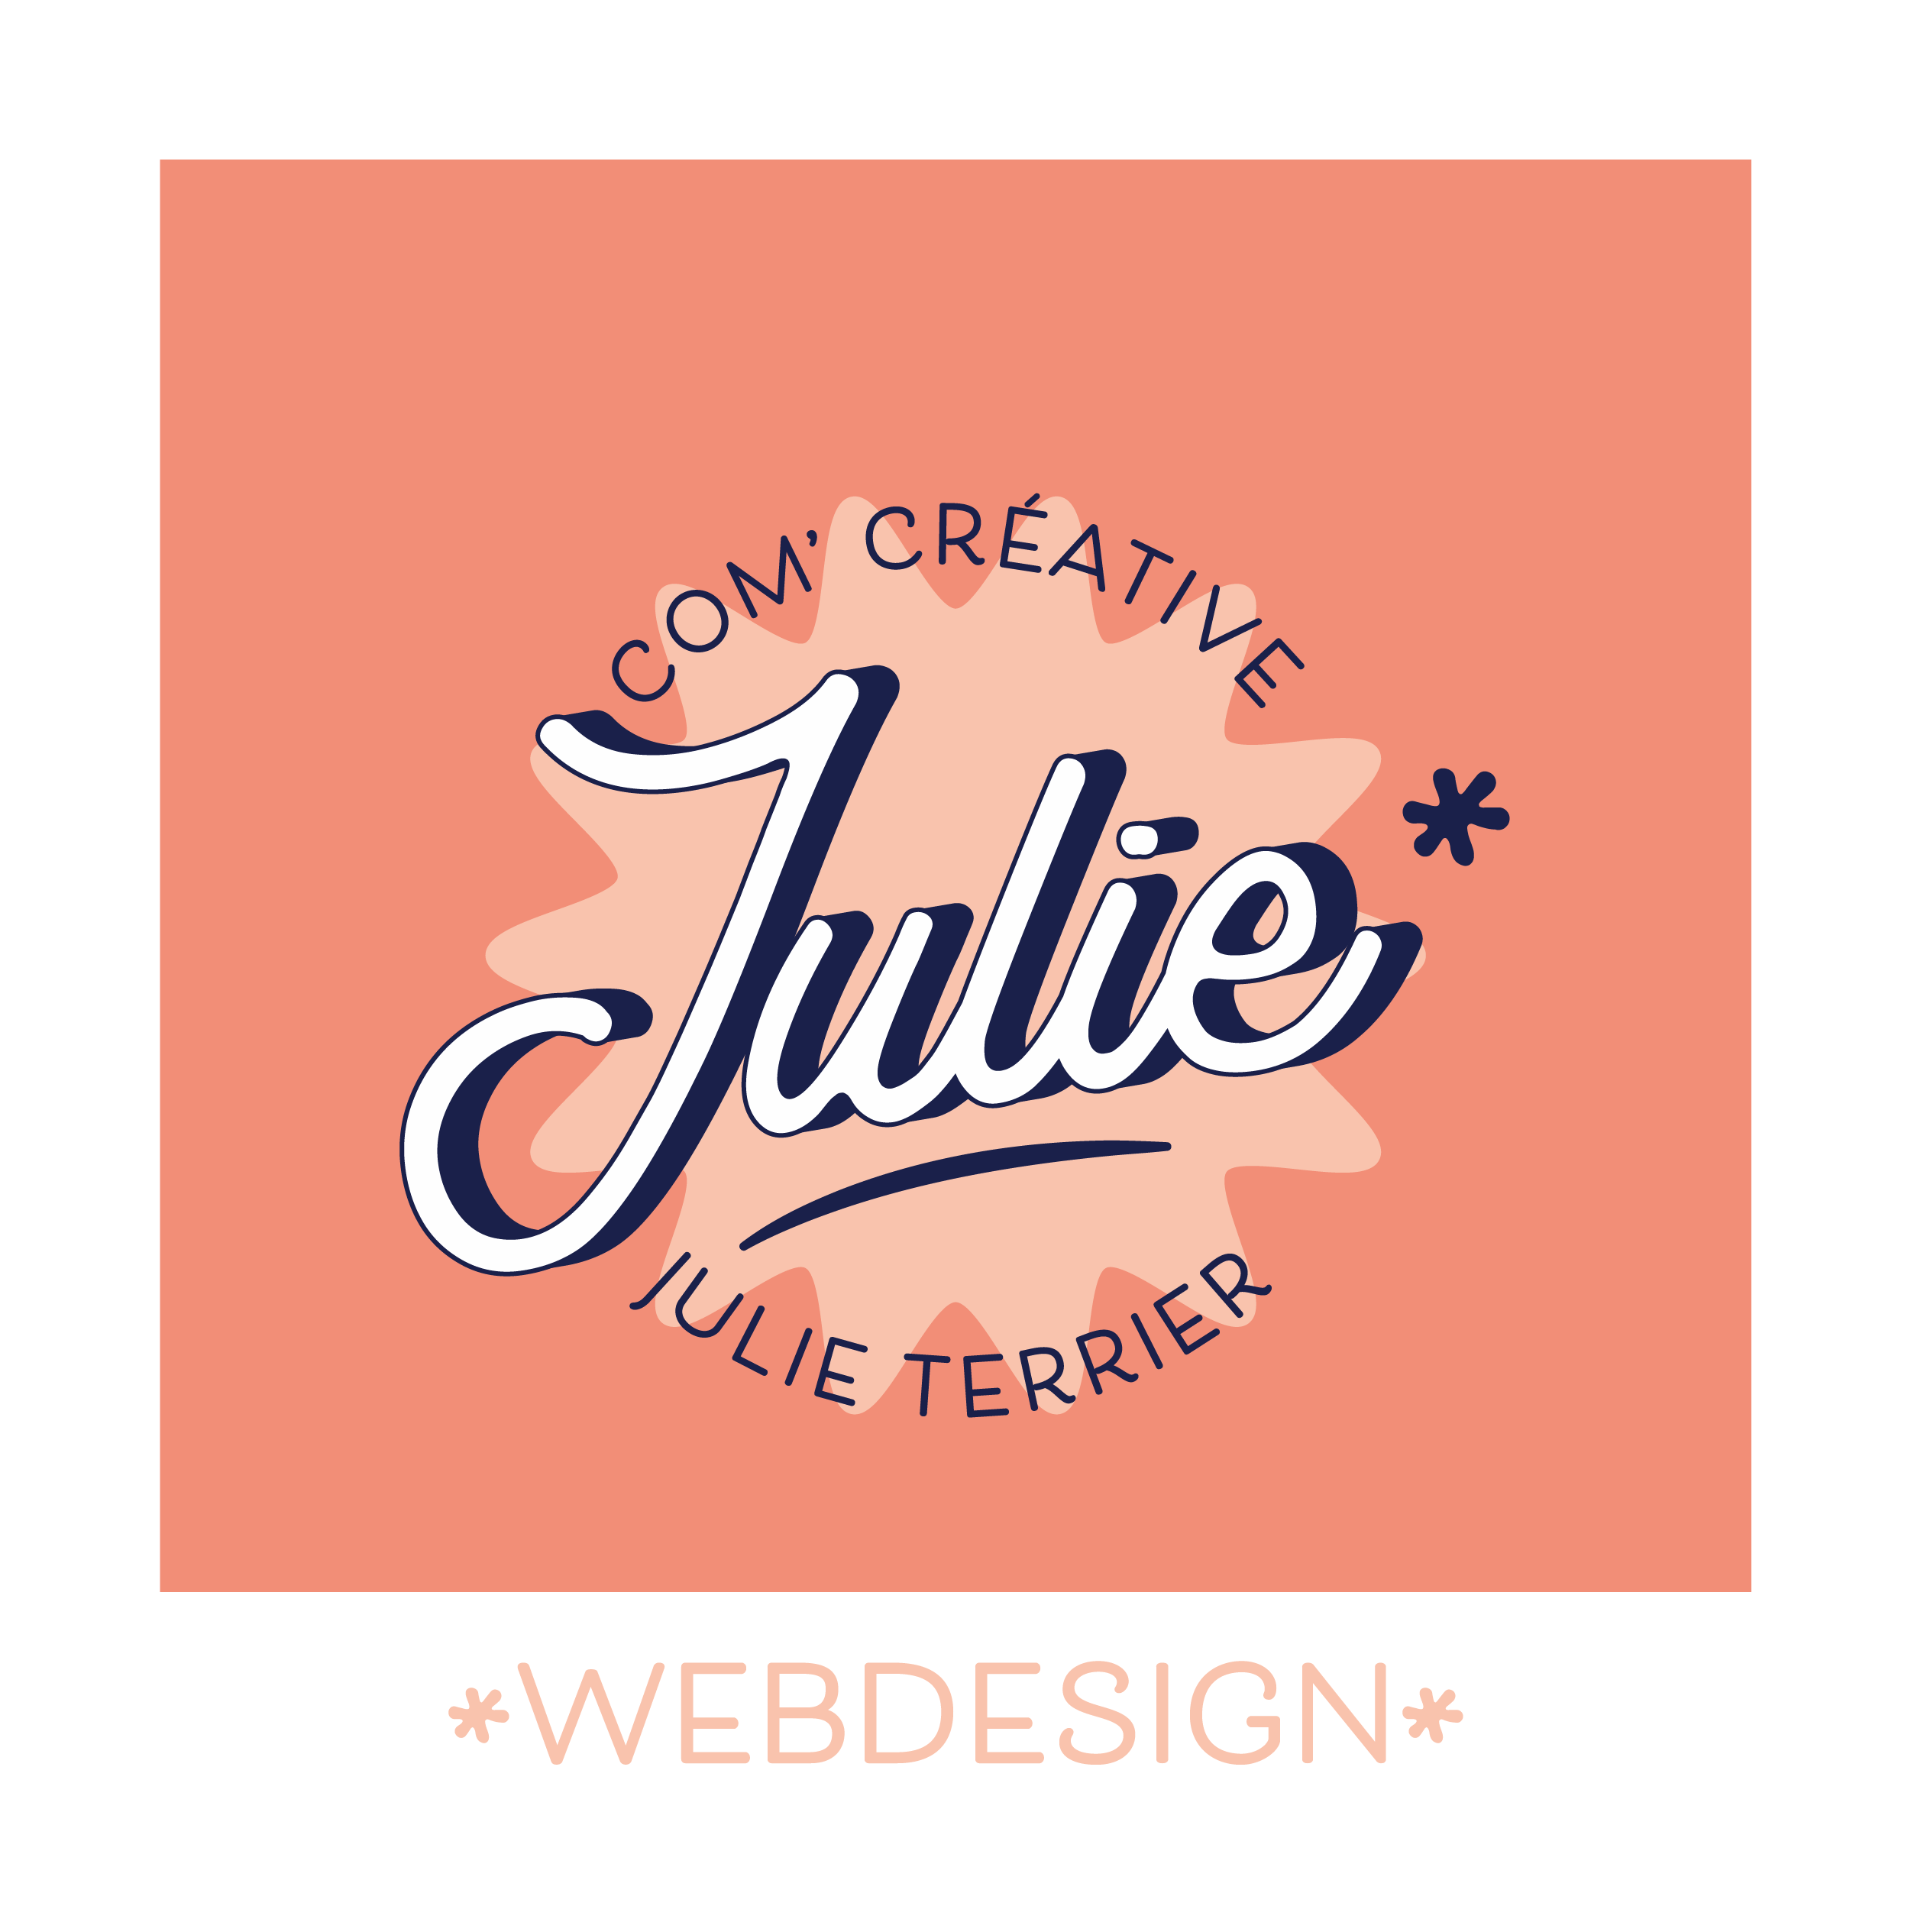 logo julie terrier - com' créative